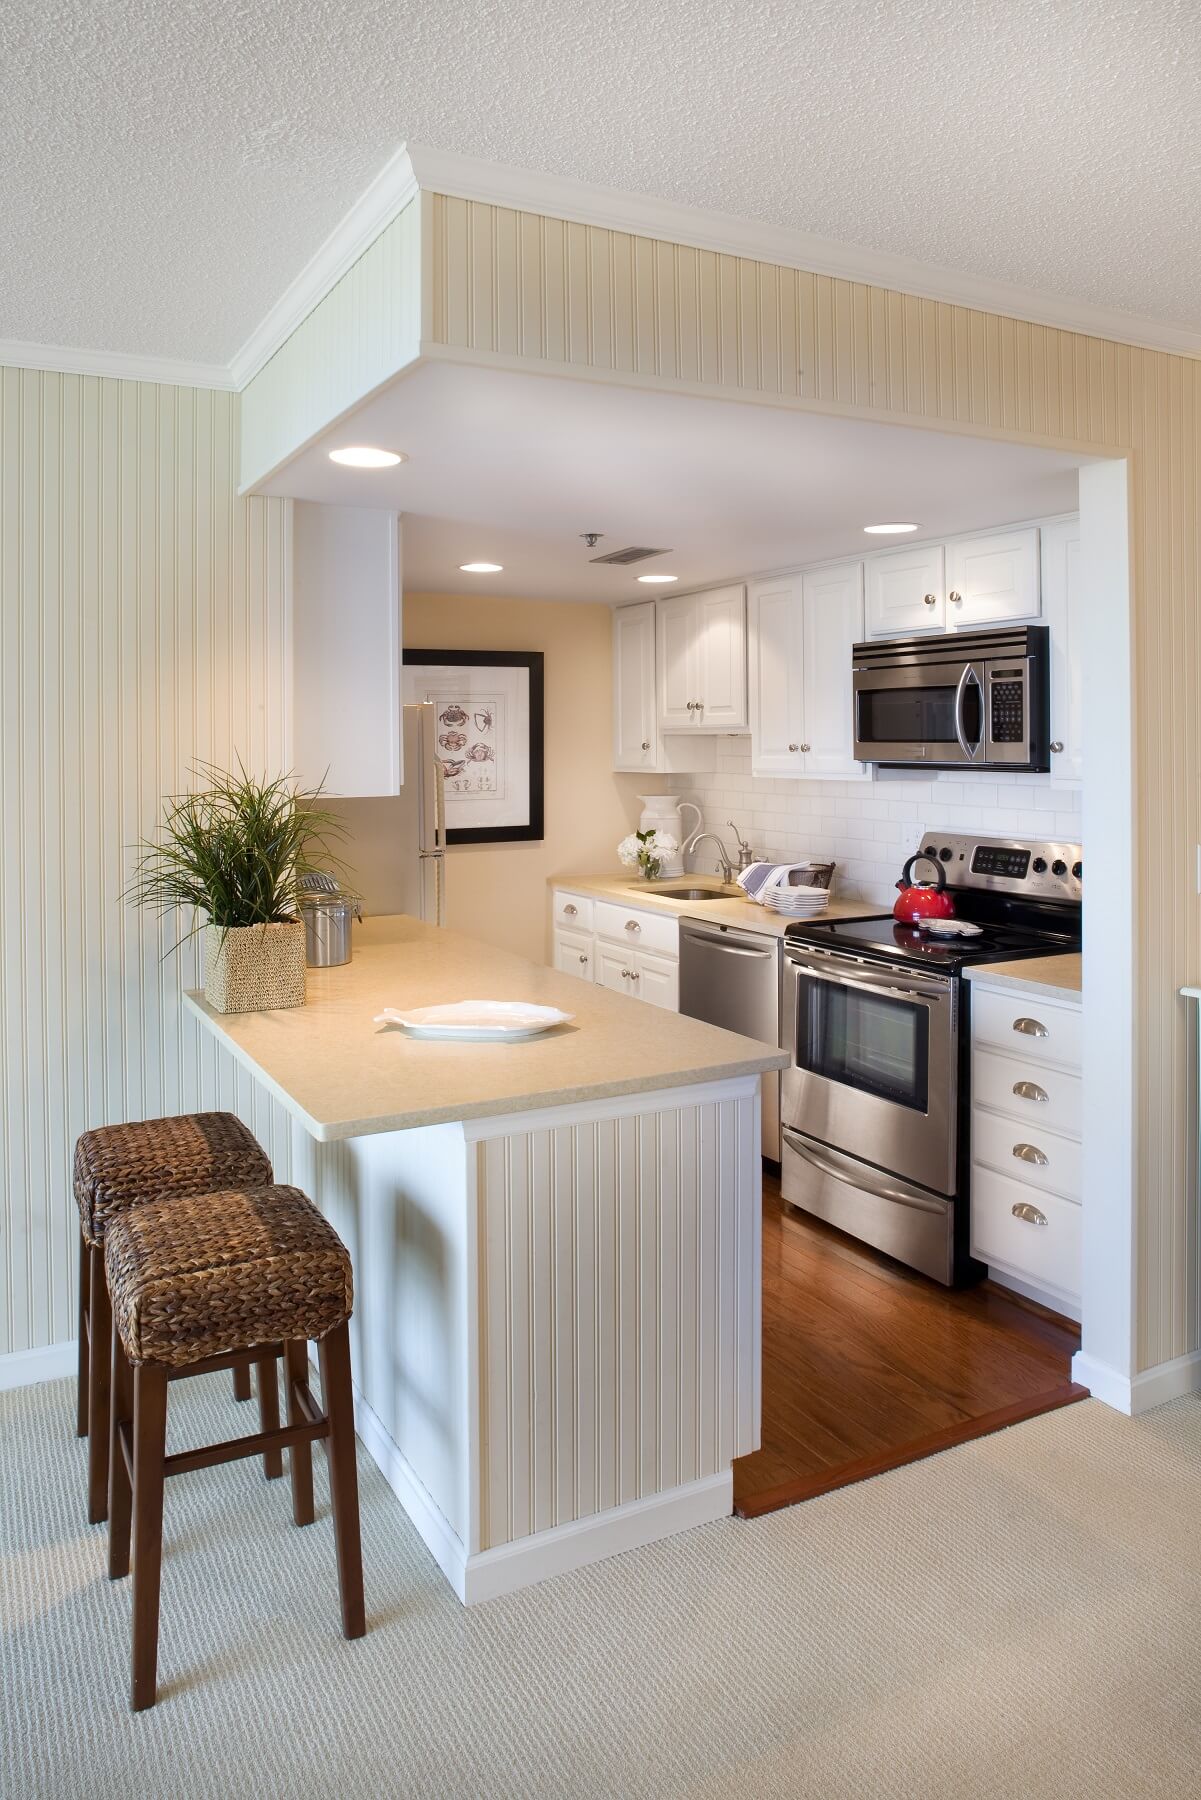 kitchen decor room idea adding vertical lines height 2021 homebnc